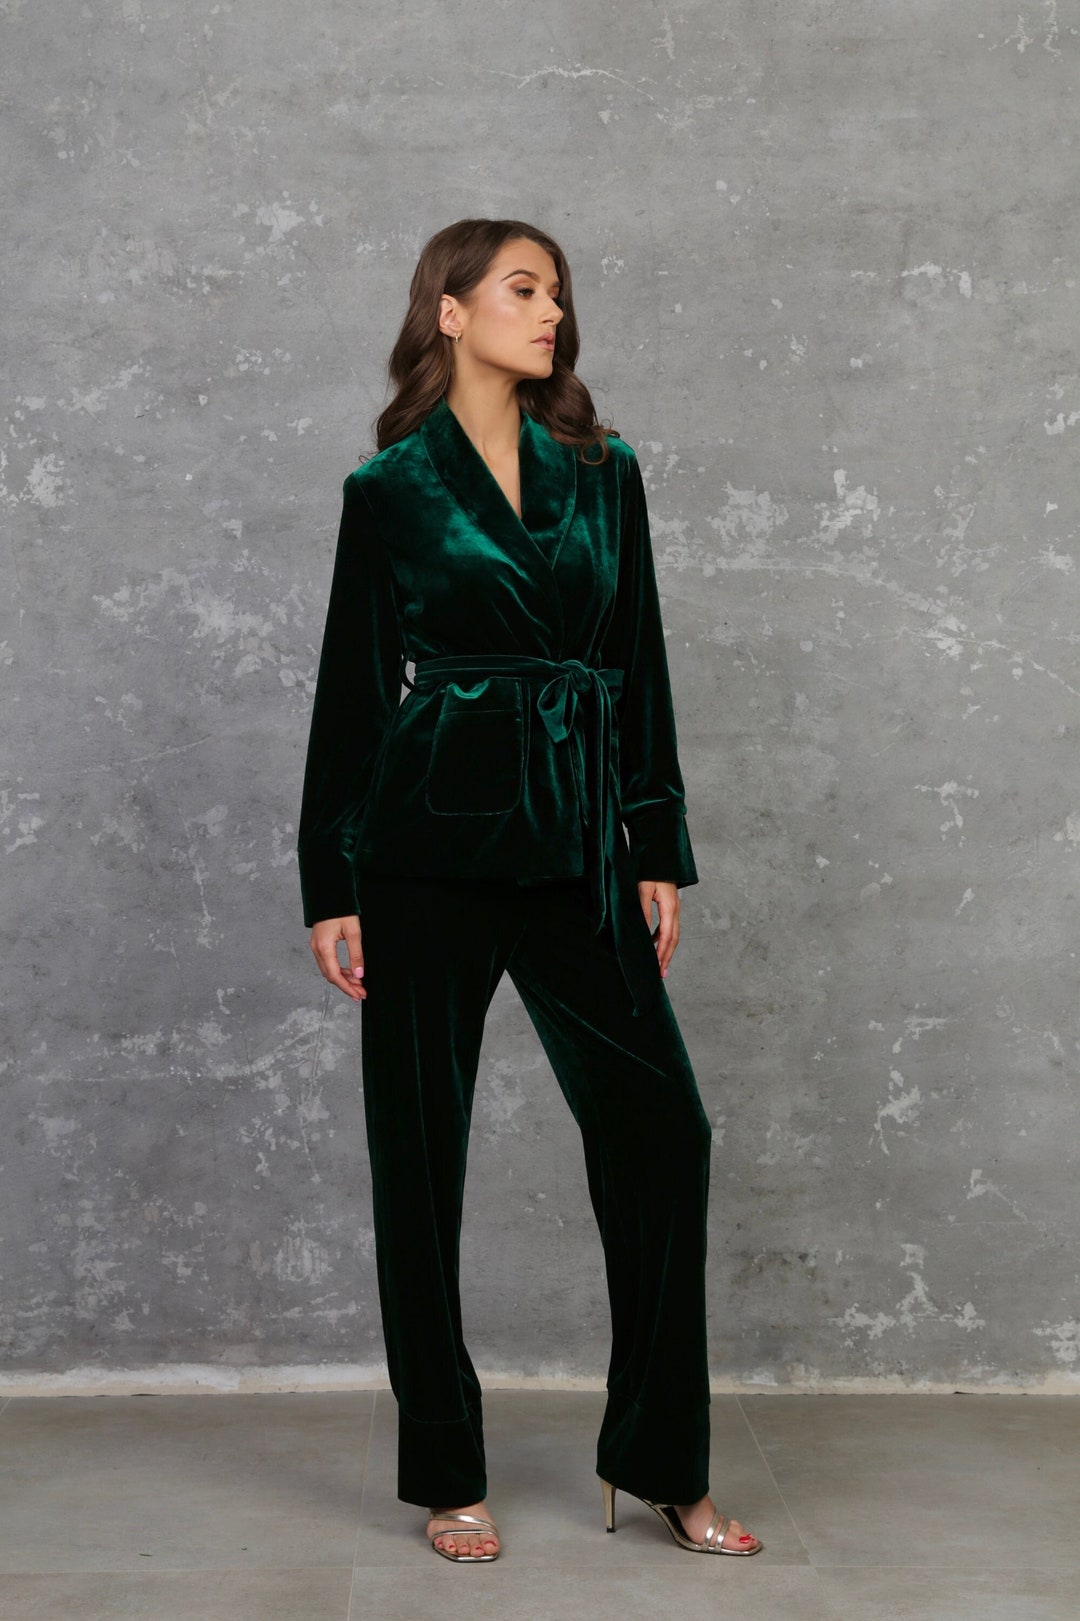 Dark Green Pantsuit for Bridesmaid Formal Smart Casual Look - Etsy